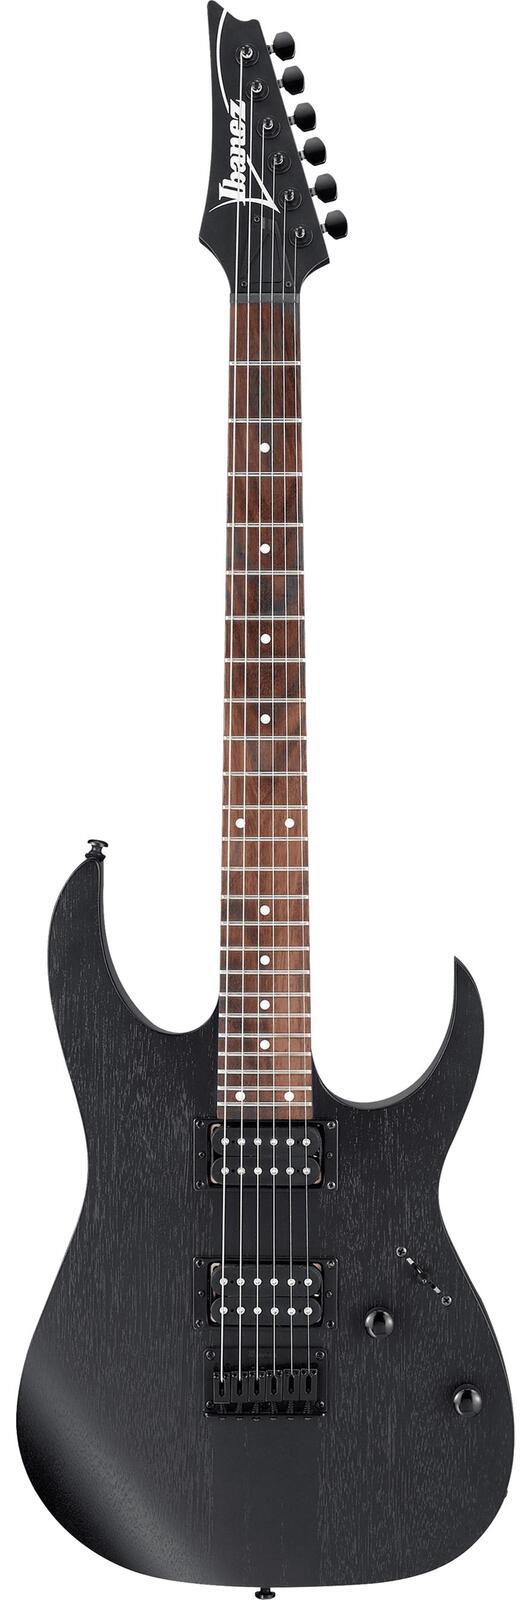 Ibañez - Guitarra Eléctrica RG, Color: Negra Mate Mod.RGRT421-WK_225